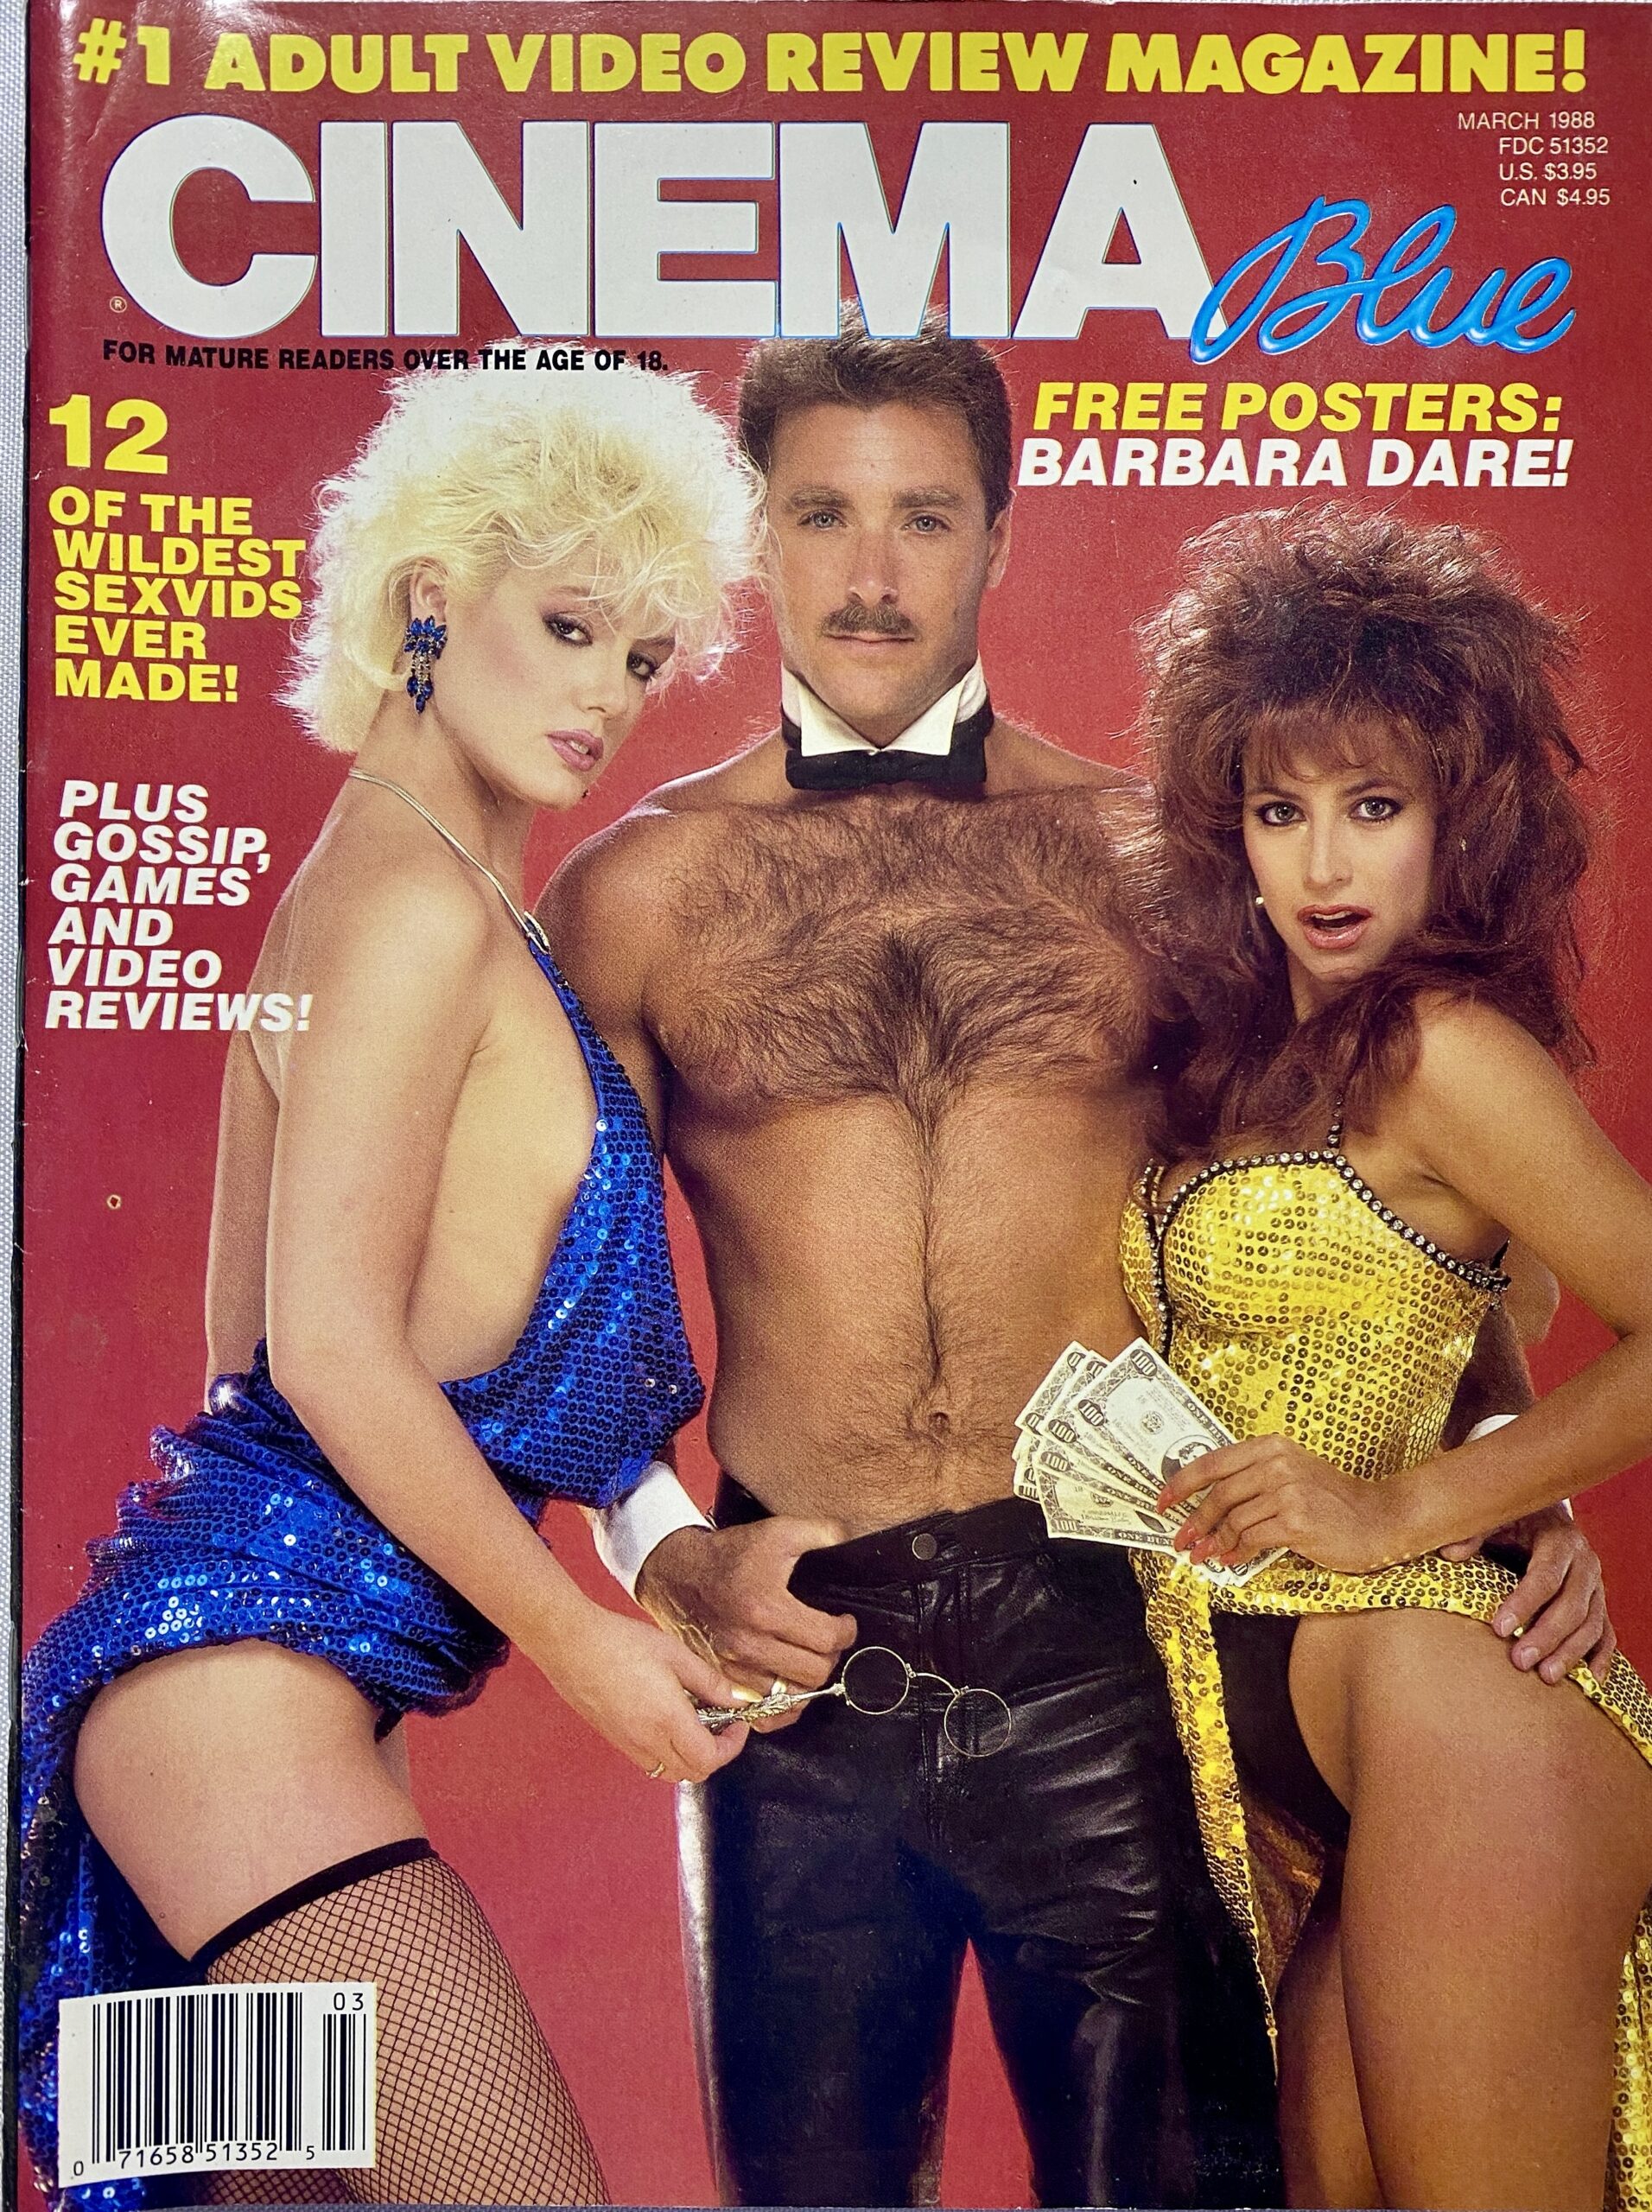 Cinema Blue March 1988 Adult Magazine - Vintage Magazines 16